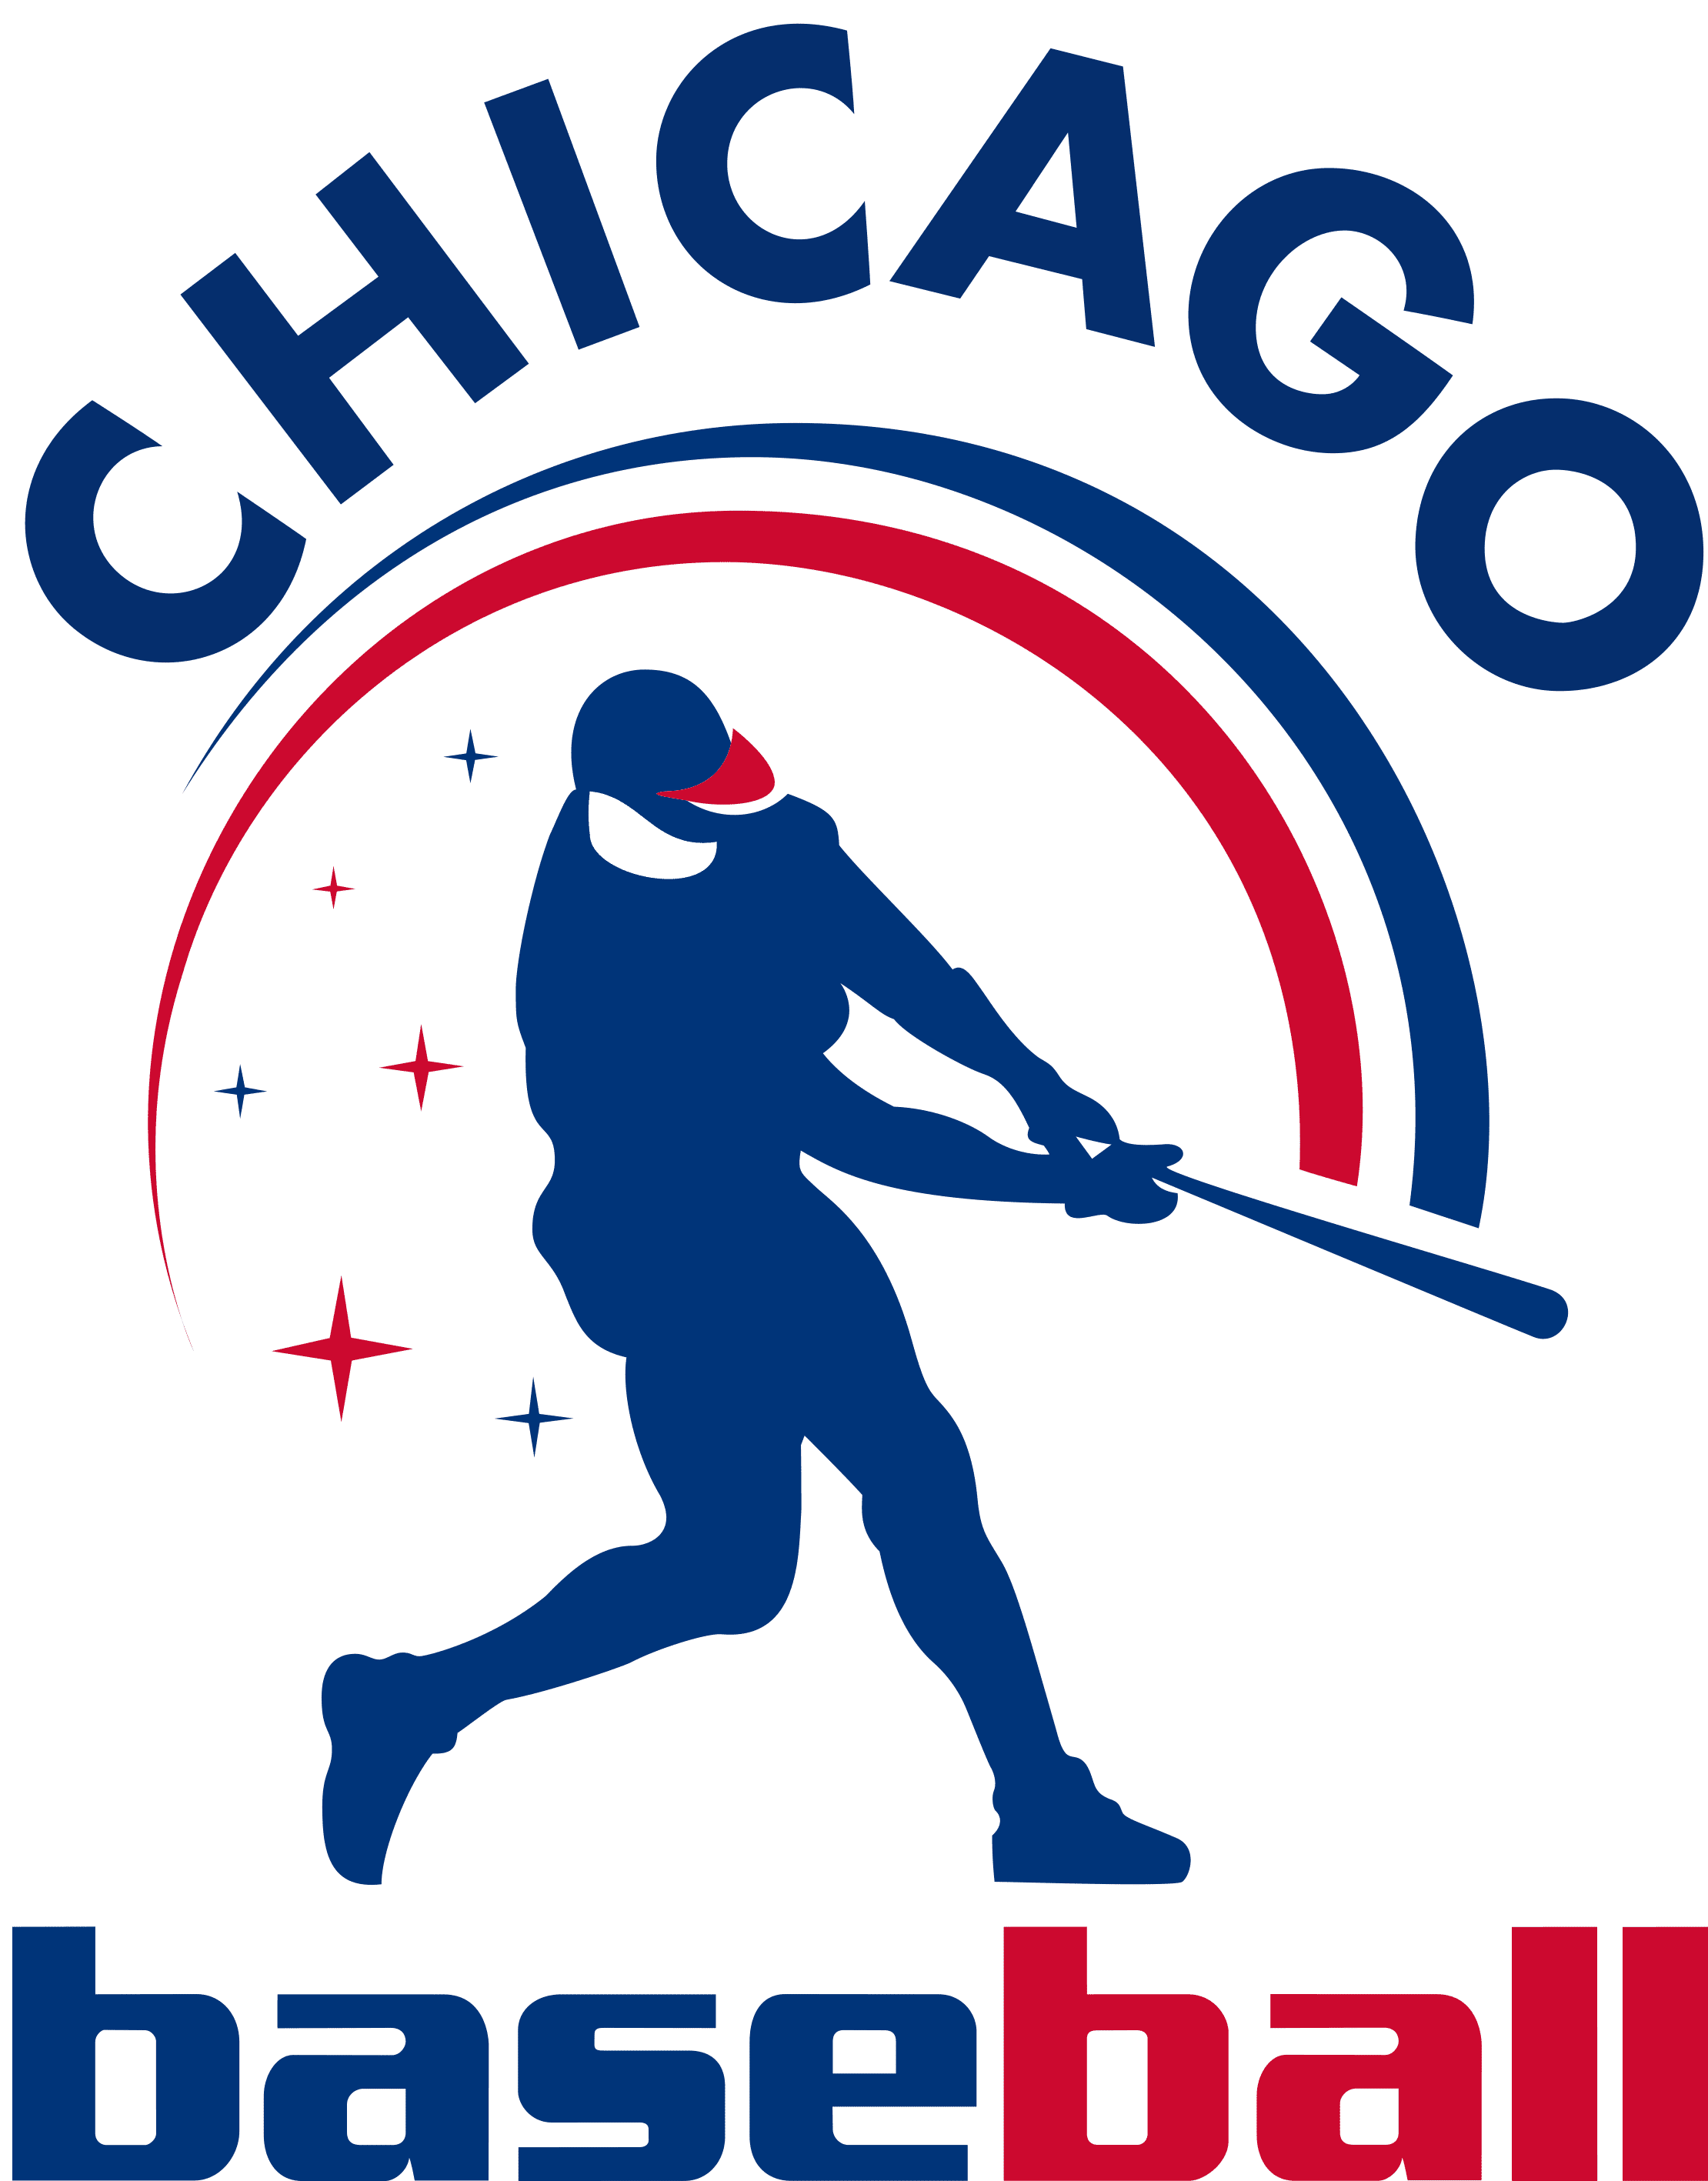 MLB Logo Chicago Cubs, Chicago Cubs SVG, Vector Chicago Cubs